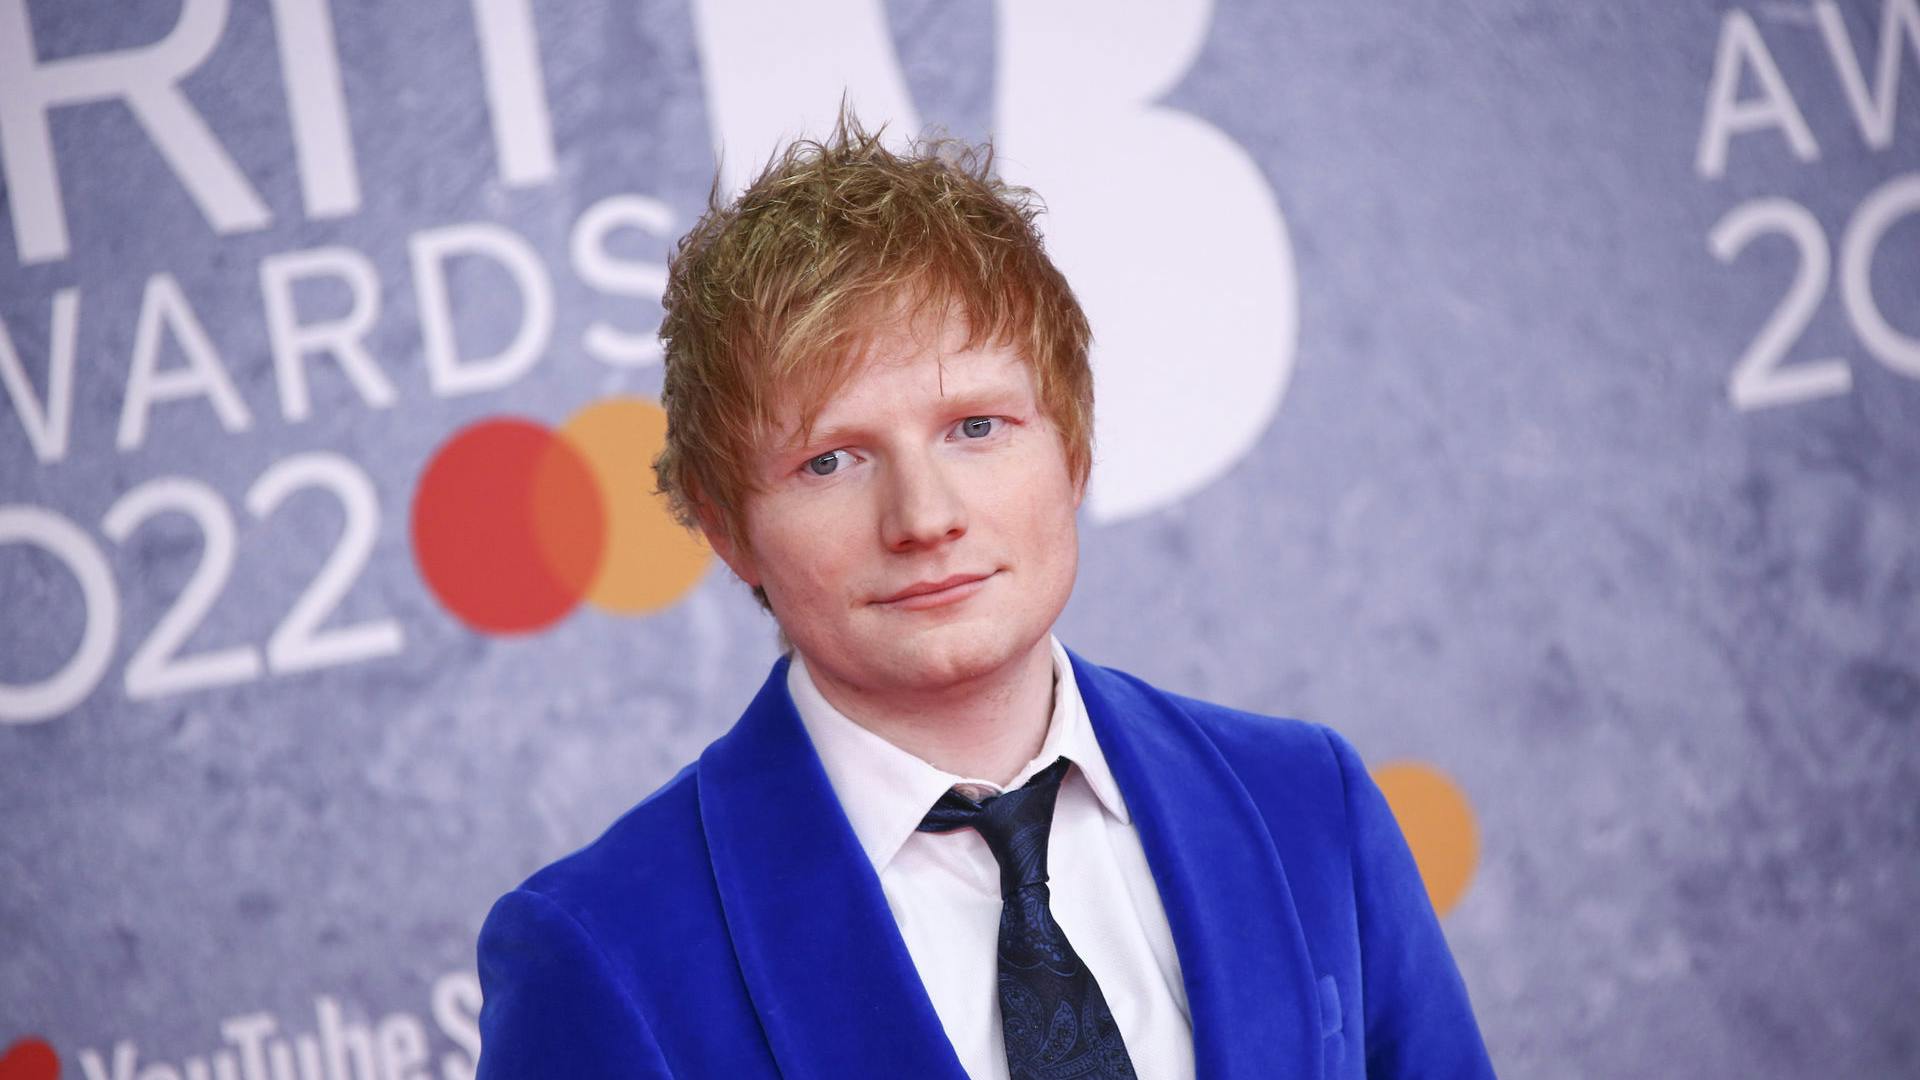 Ed Sheeran lukker fans helt ind i den nye dokumentarserie "Ed Sheeran: The Sum of it All".